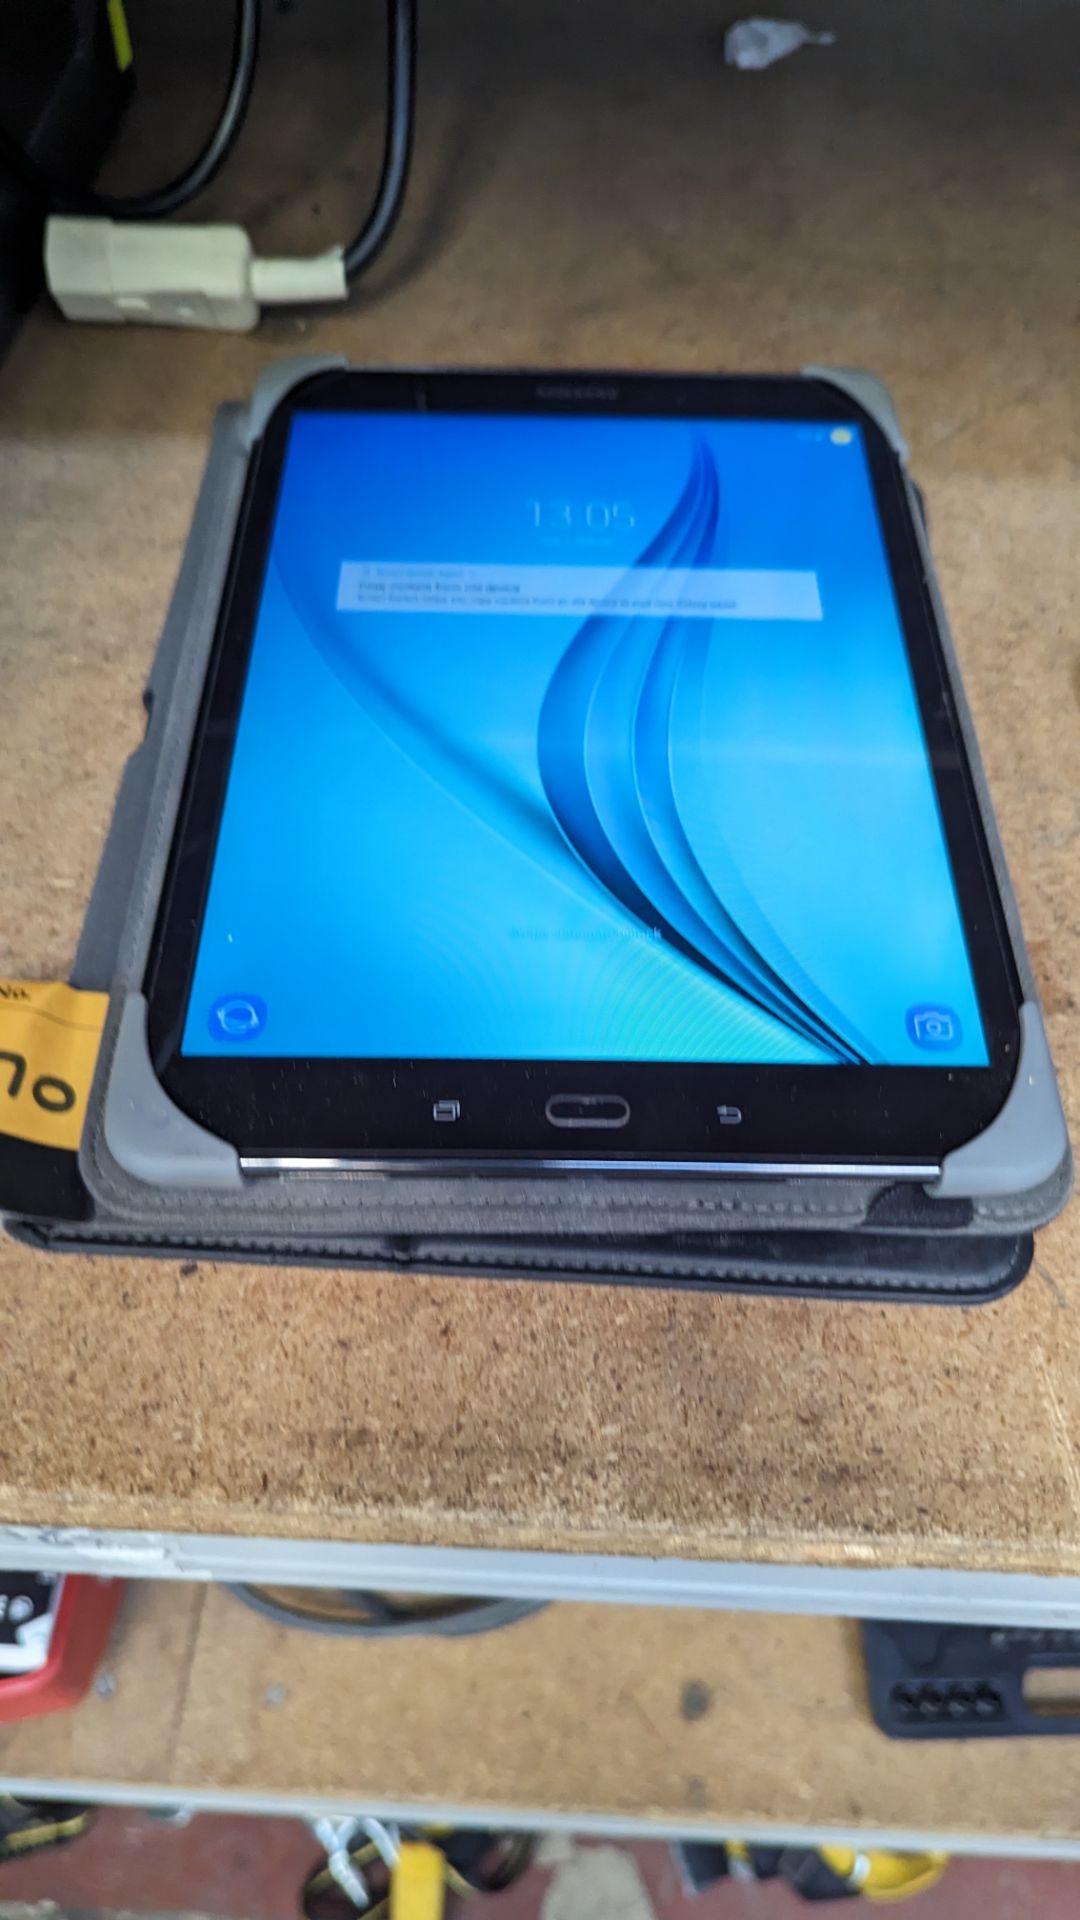 Samsung Galaxy tablet - Image 4 of 8